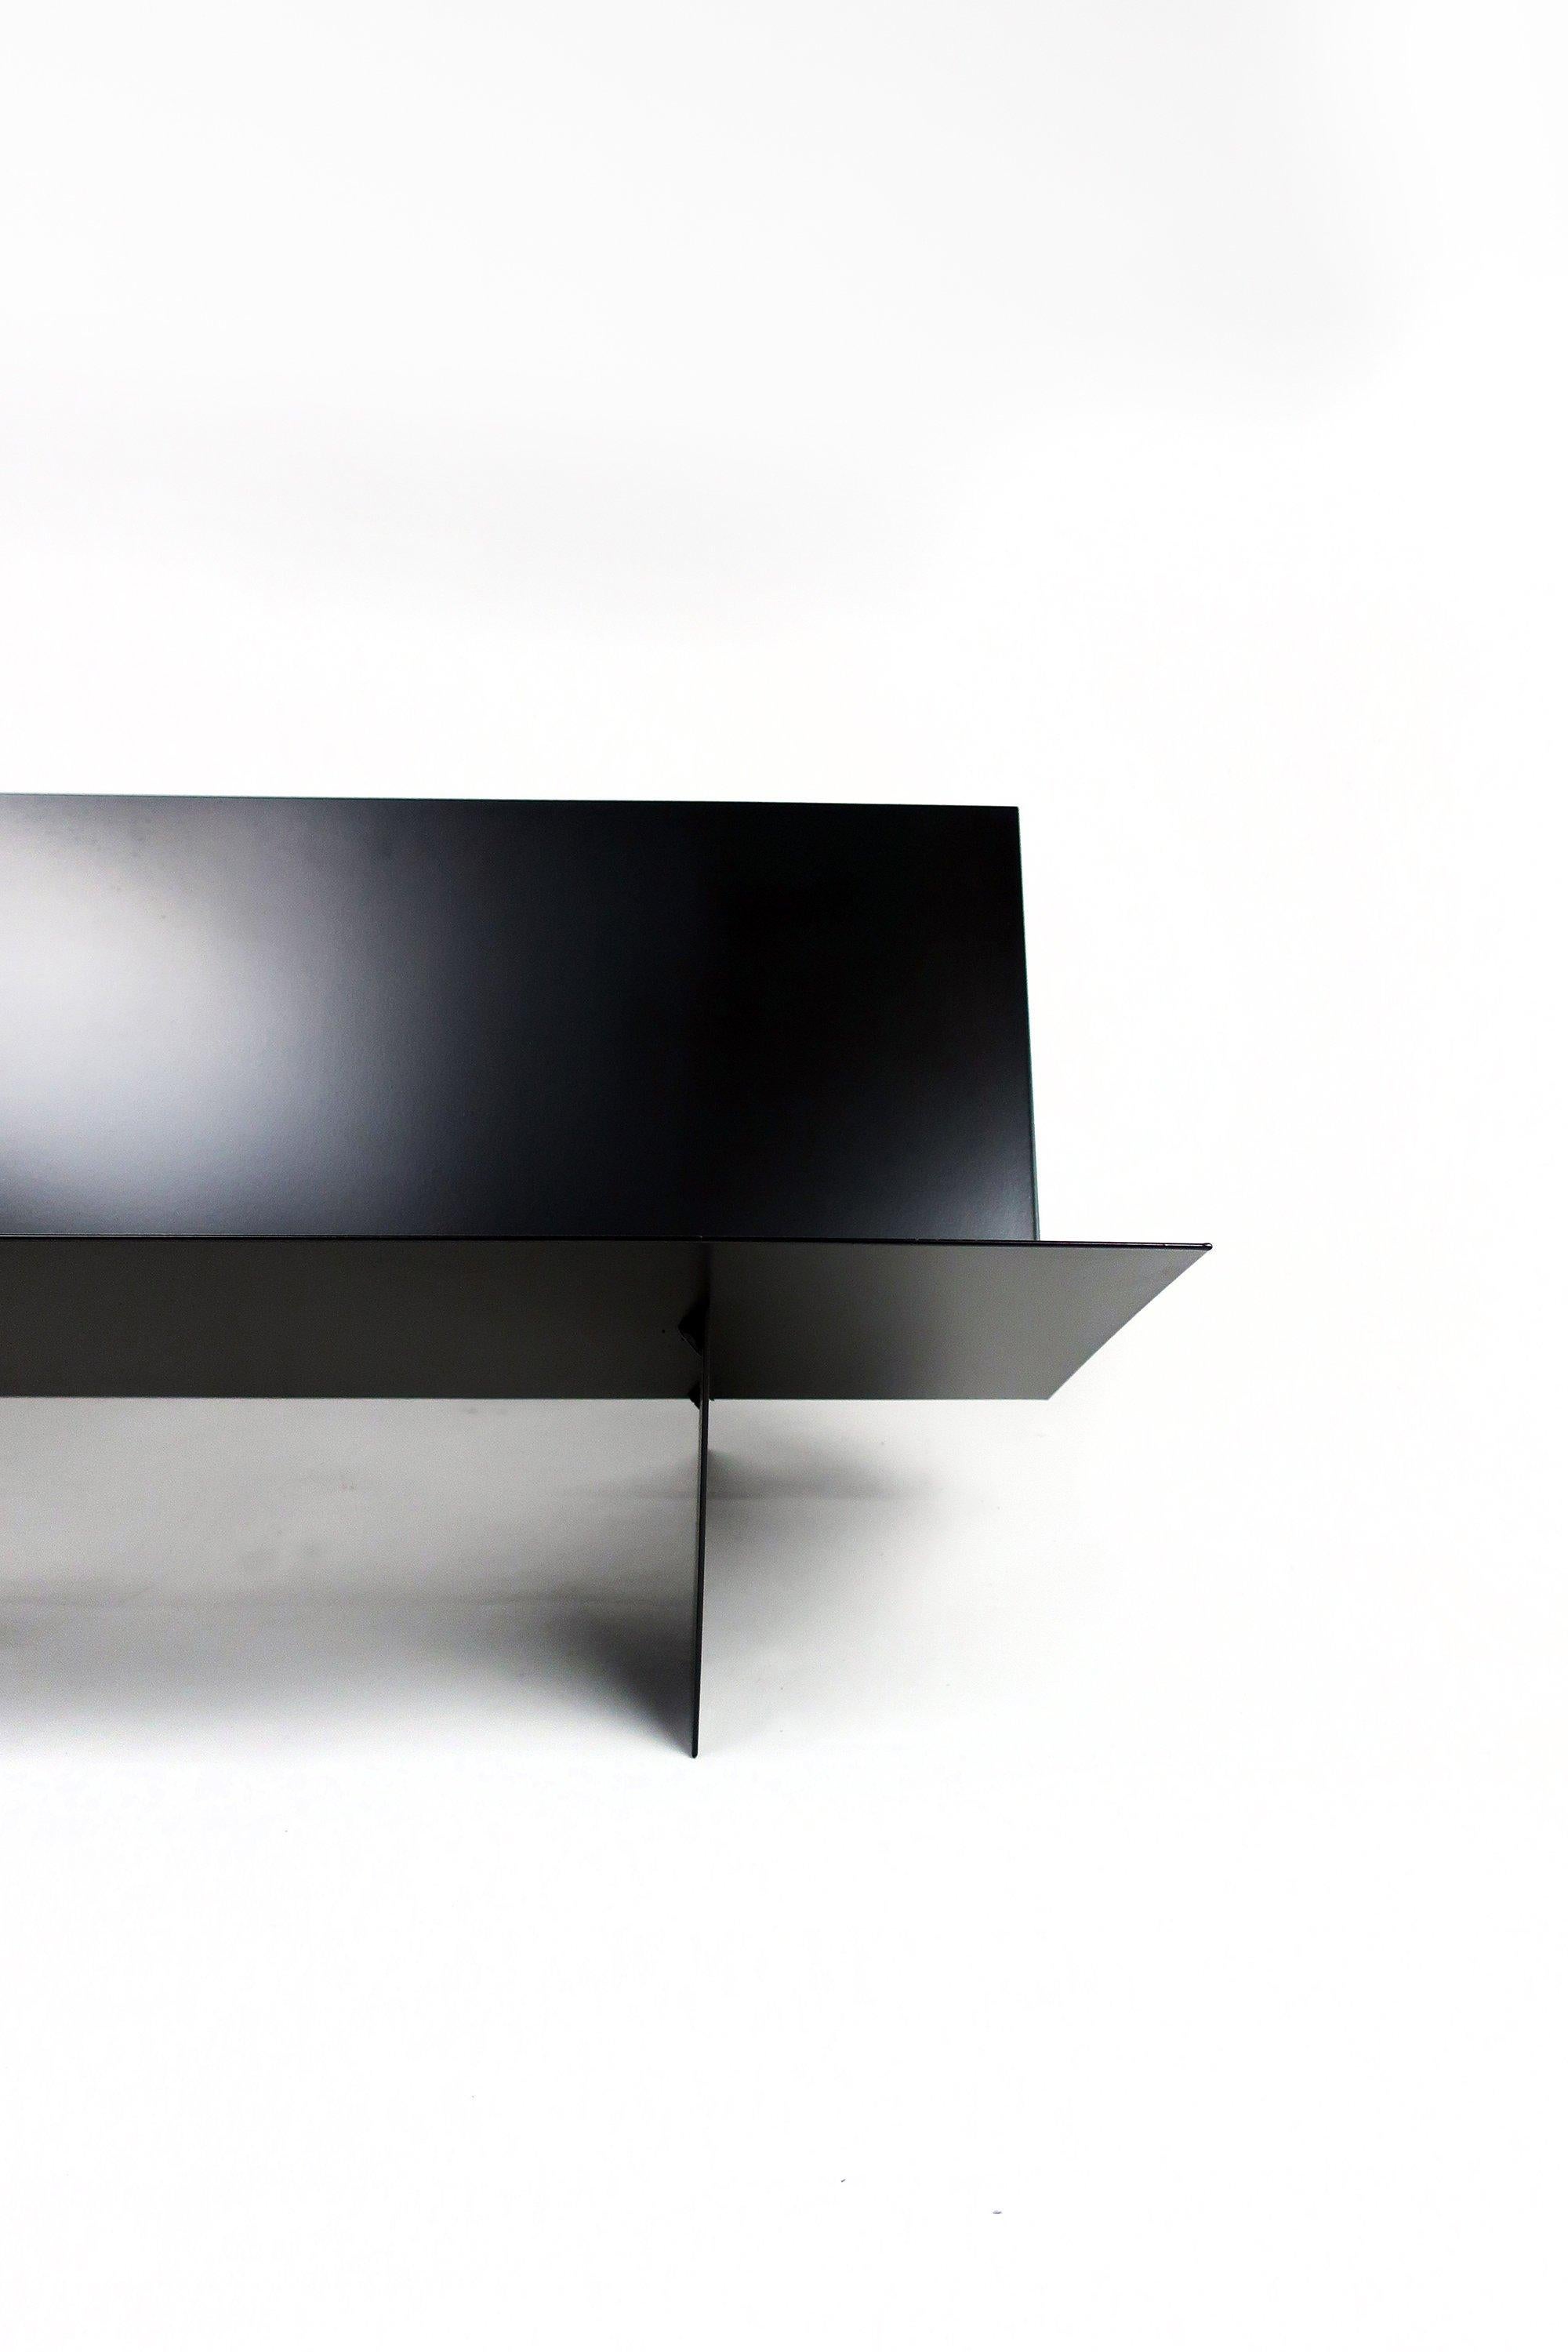 Contemporary Metal BG Record Shelf by Tenon Design